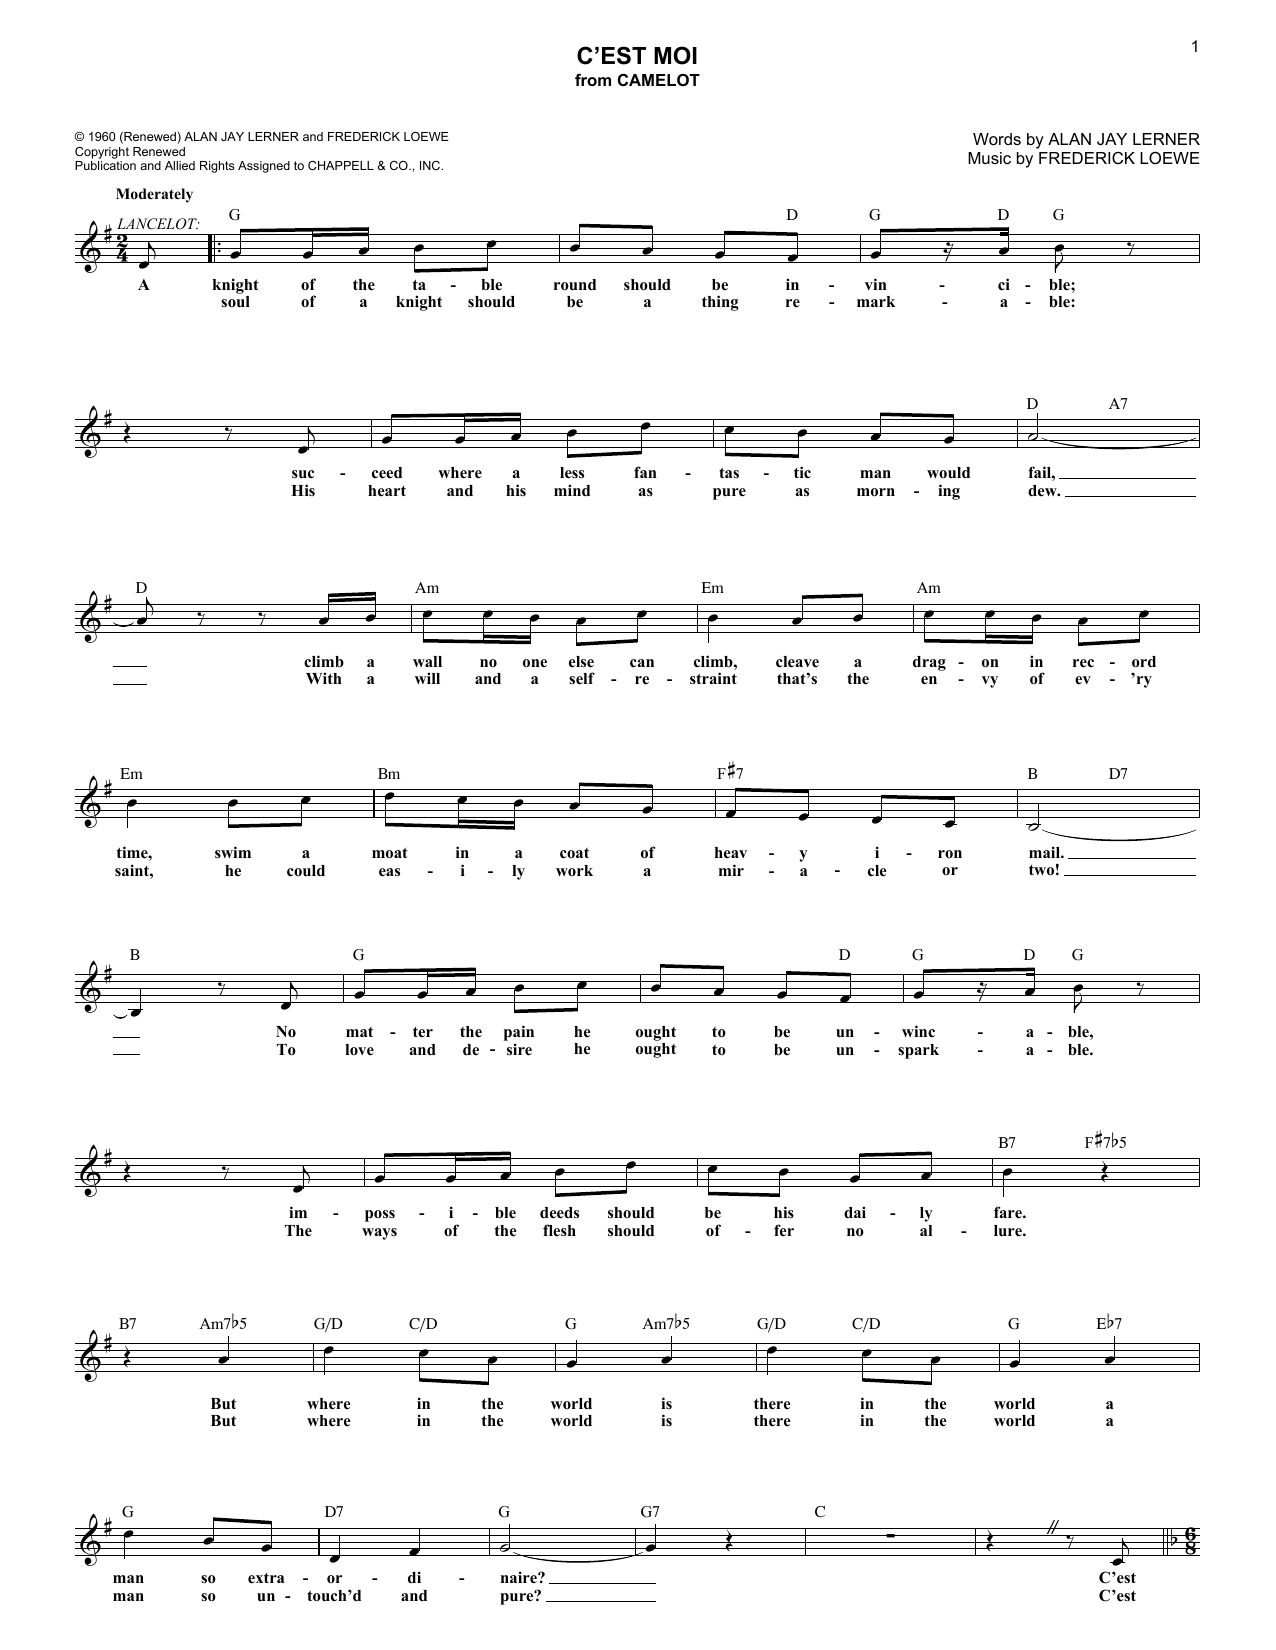 Lerner & Loewe C'est Moi Sheet Music Notes & Chords for Melody Line, Lyrics & Chords - Download or Print PDF